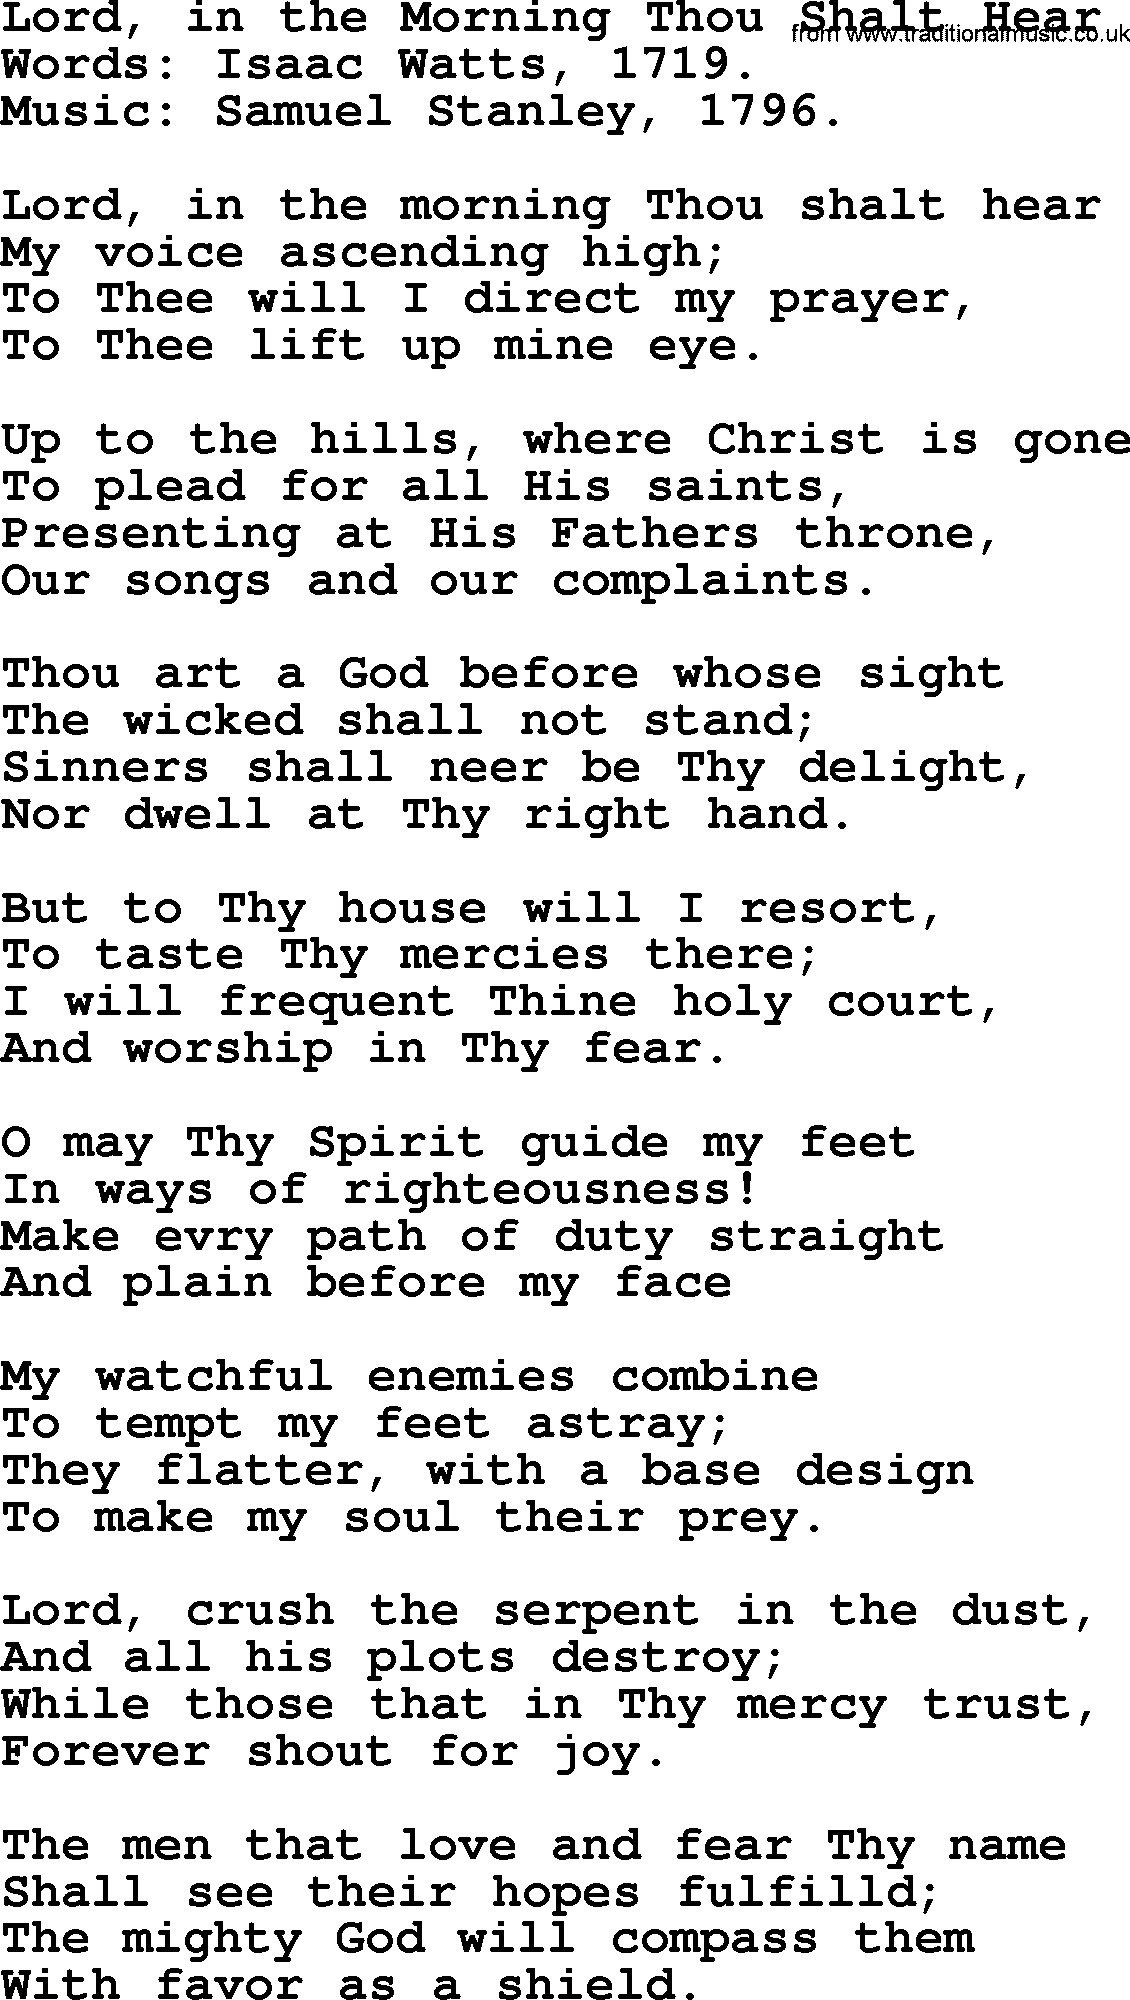 Isaac Watts Christian hymn: Lord, in the Morning Thou Shalt Hear- lyricss